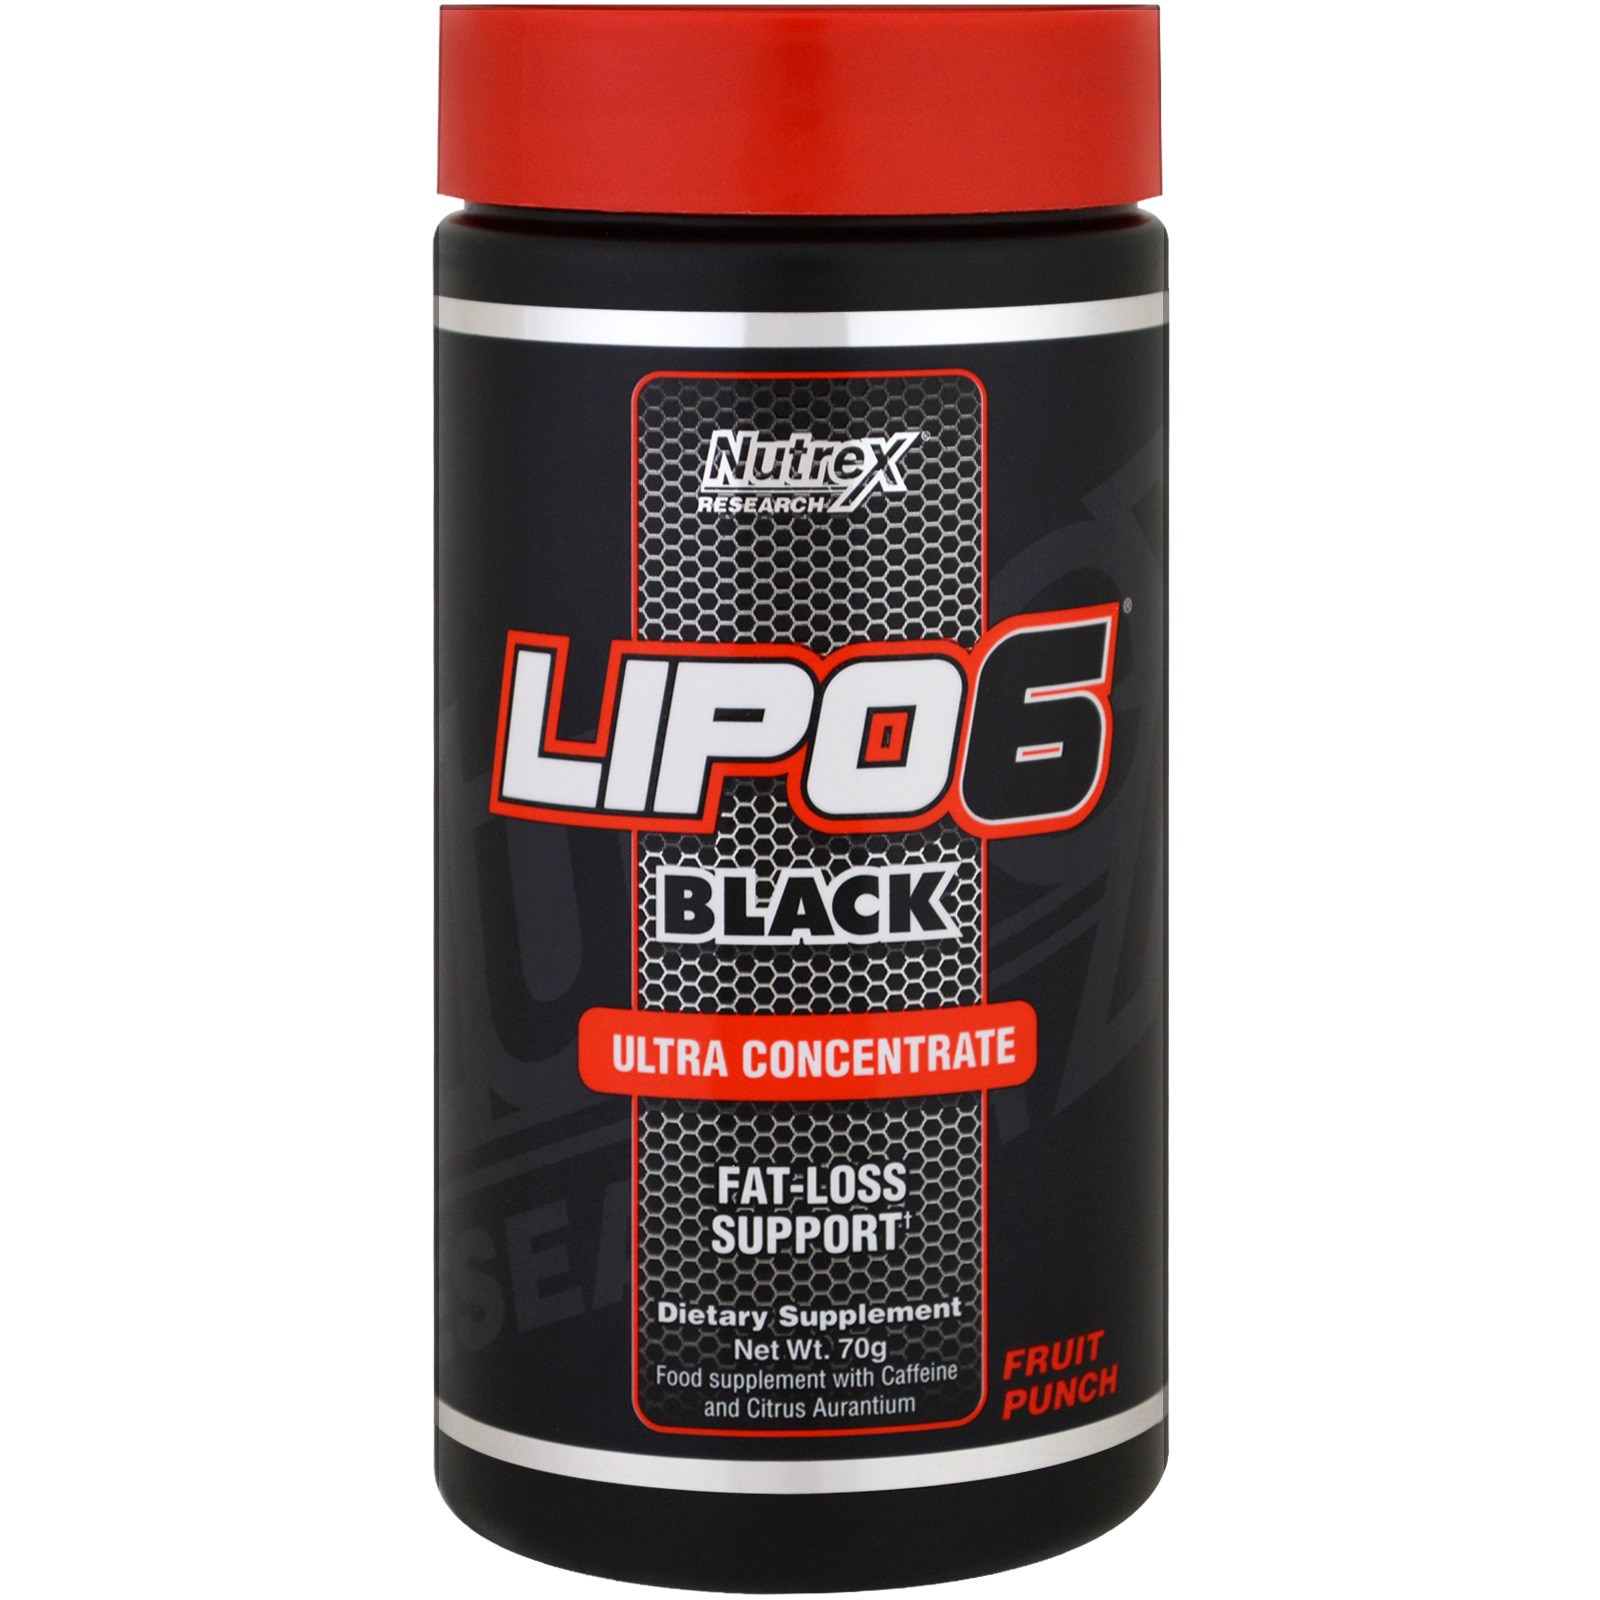 Lipo 6 купить. Lipo 6 Black Ultra Concentrate. Nutrex Lipo-6 Black ультра-концентрат. Nutrex research Lipo 6 Black Ultra Concentrate. Nutrex research, Lipo-6 Black, ультраконцентрат.